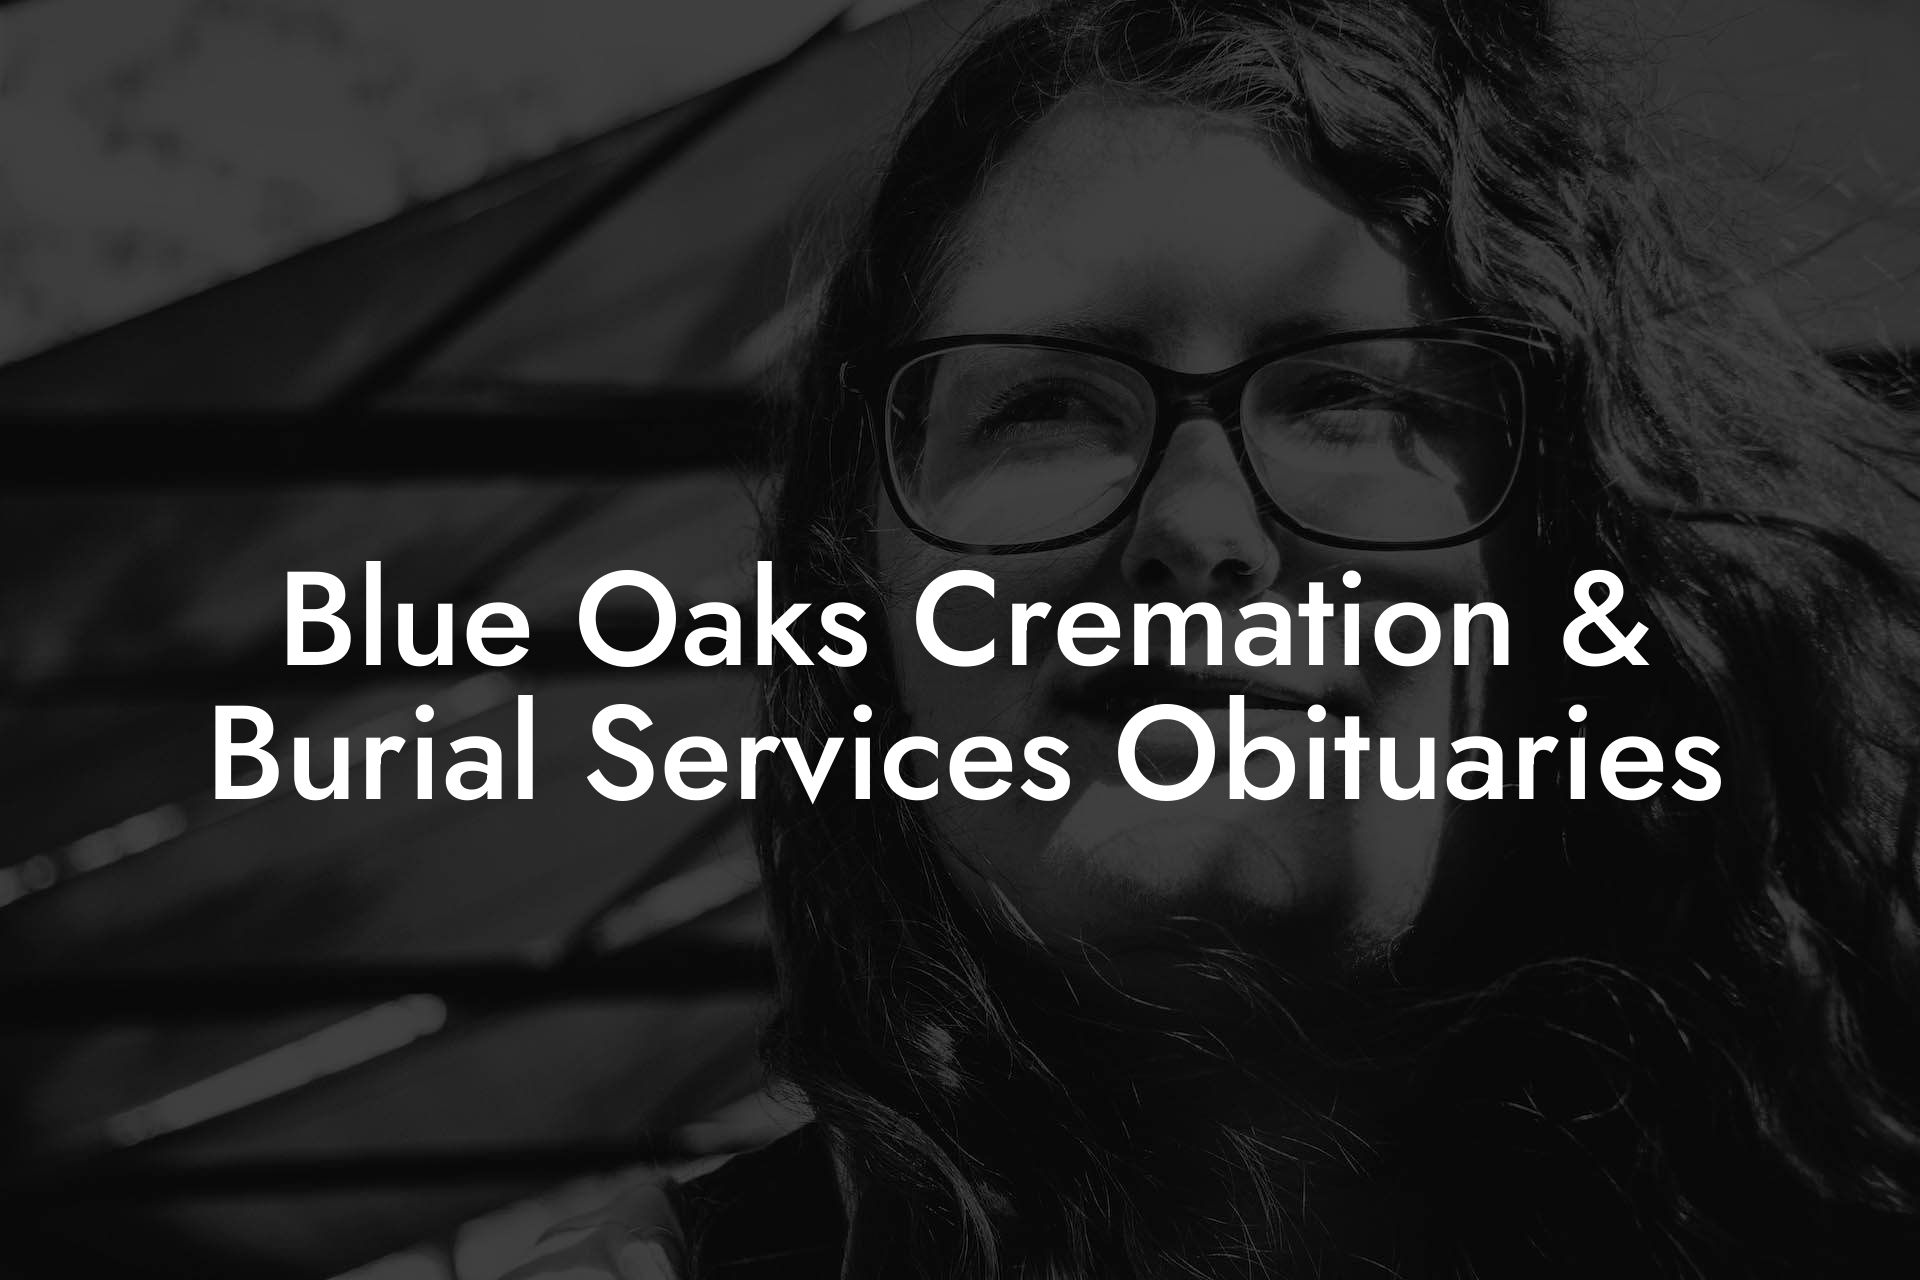 Blue Oaks Cremation & Burial Services Obituaries